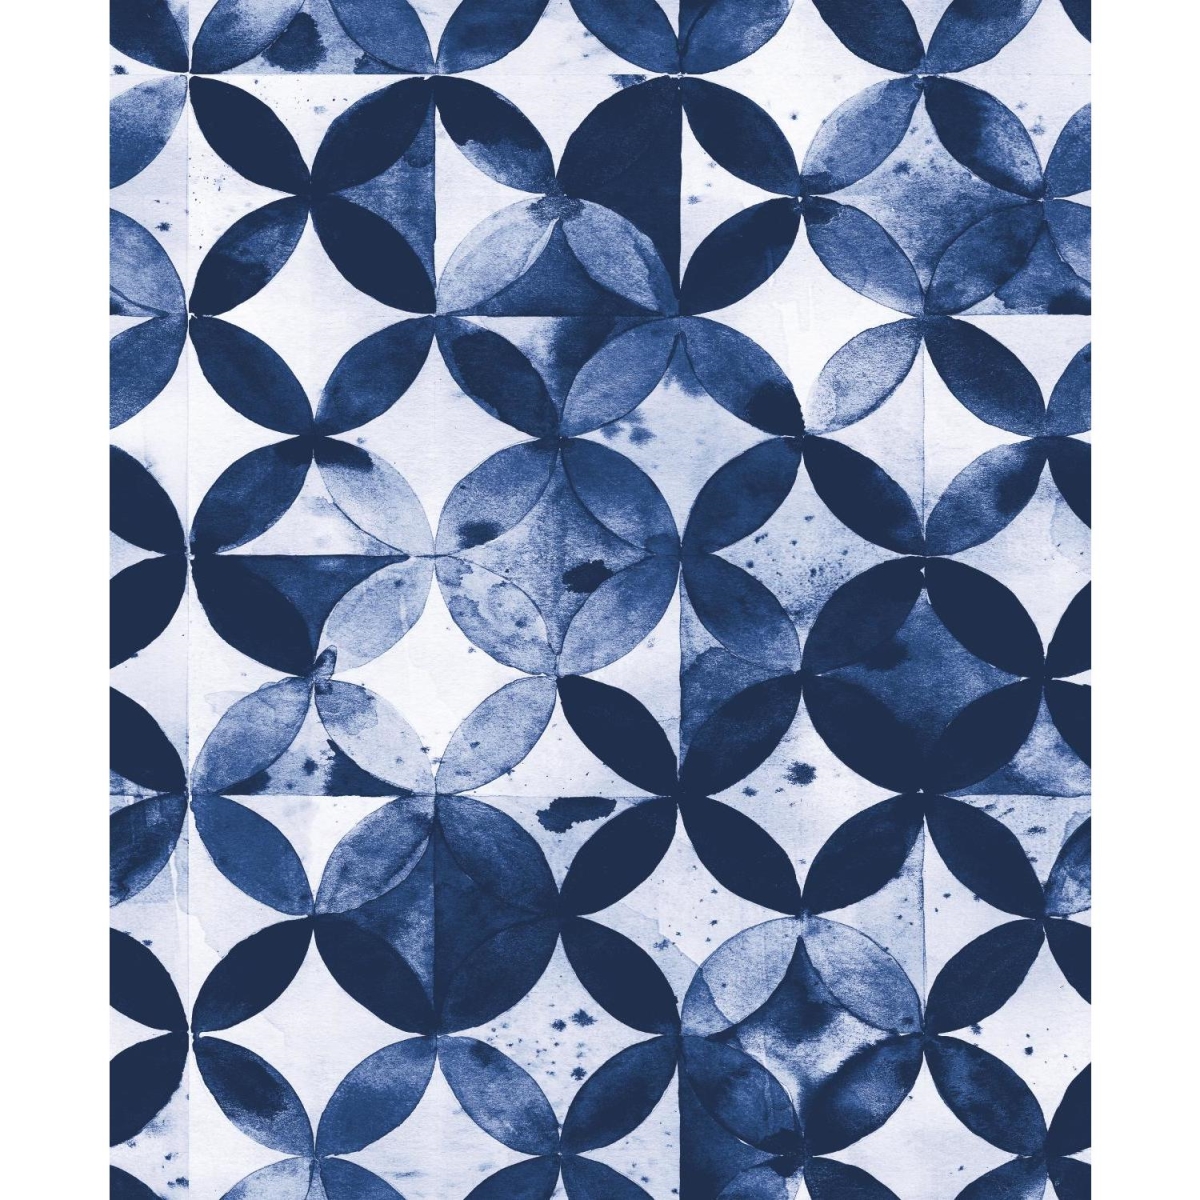 Rmk11354rl Paul Brent Moroccan Tile Peel & Stick Wallpaper, Blue